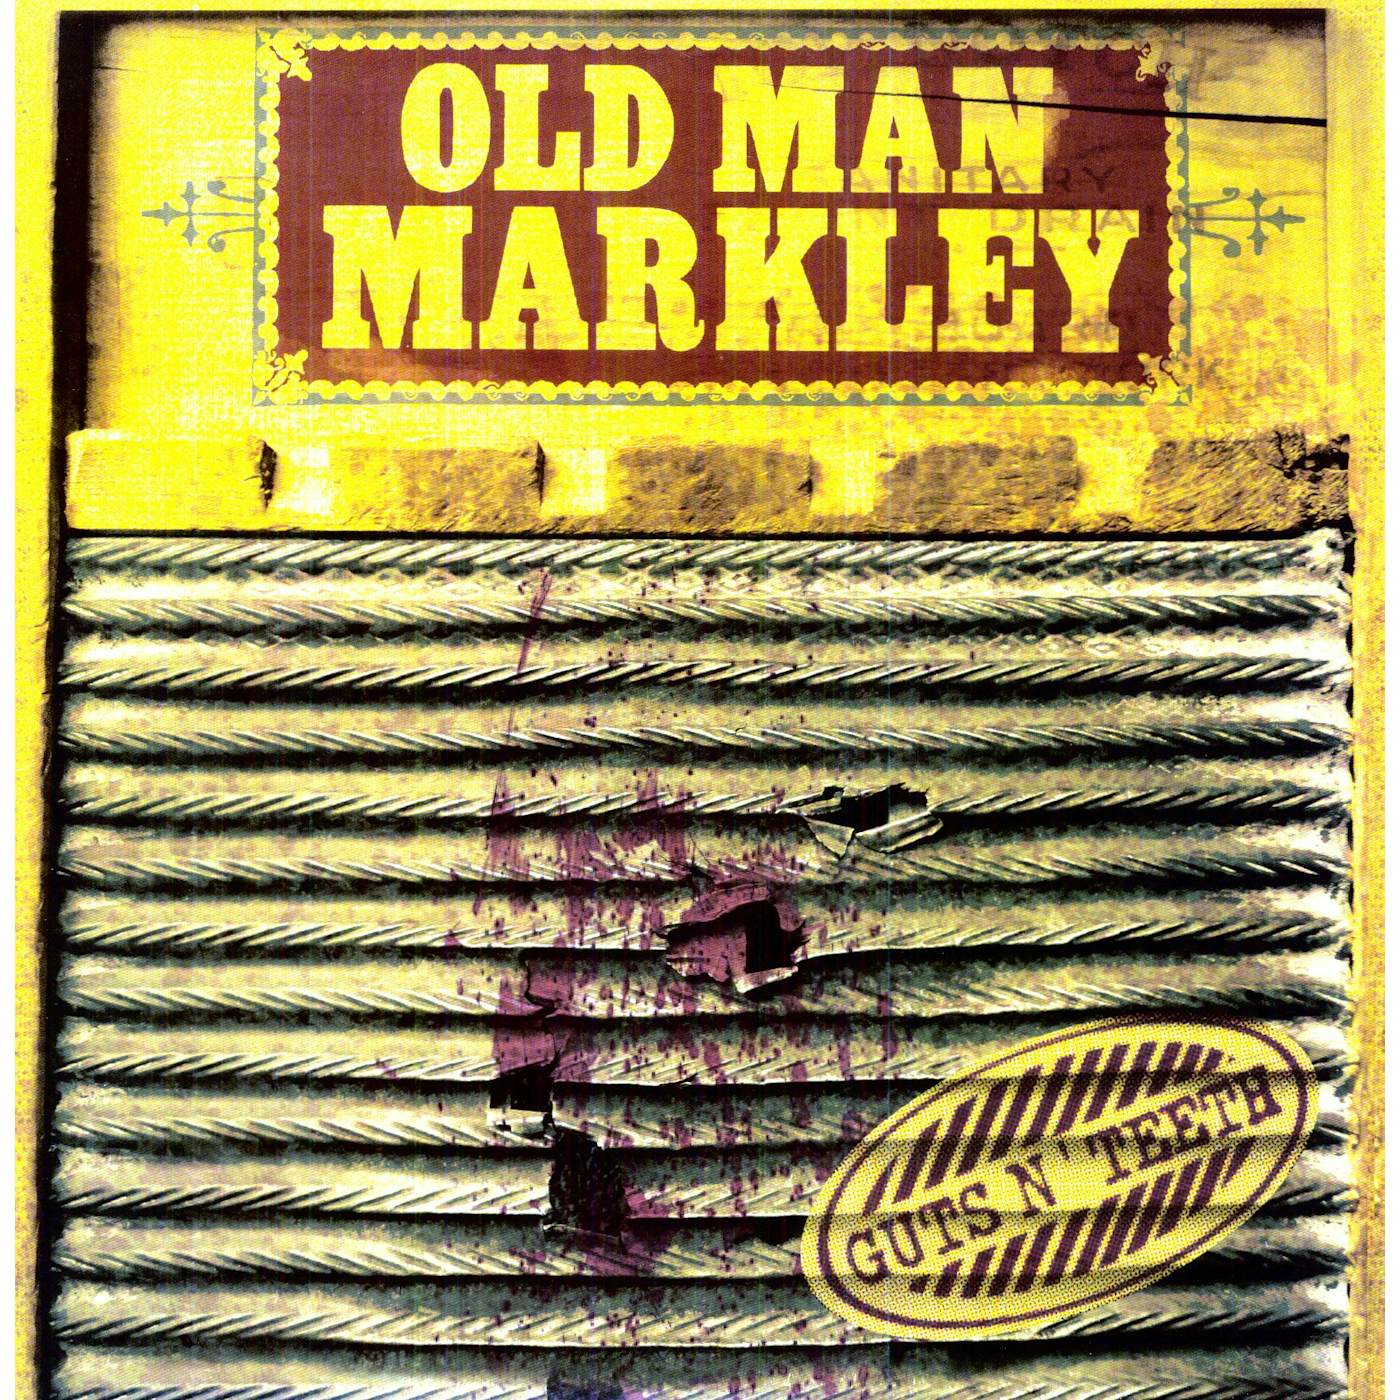 Old Man Markley GUTS N TEETH Vinyl Record